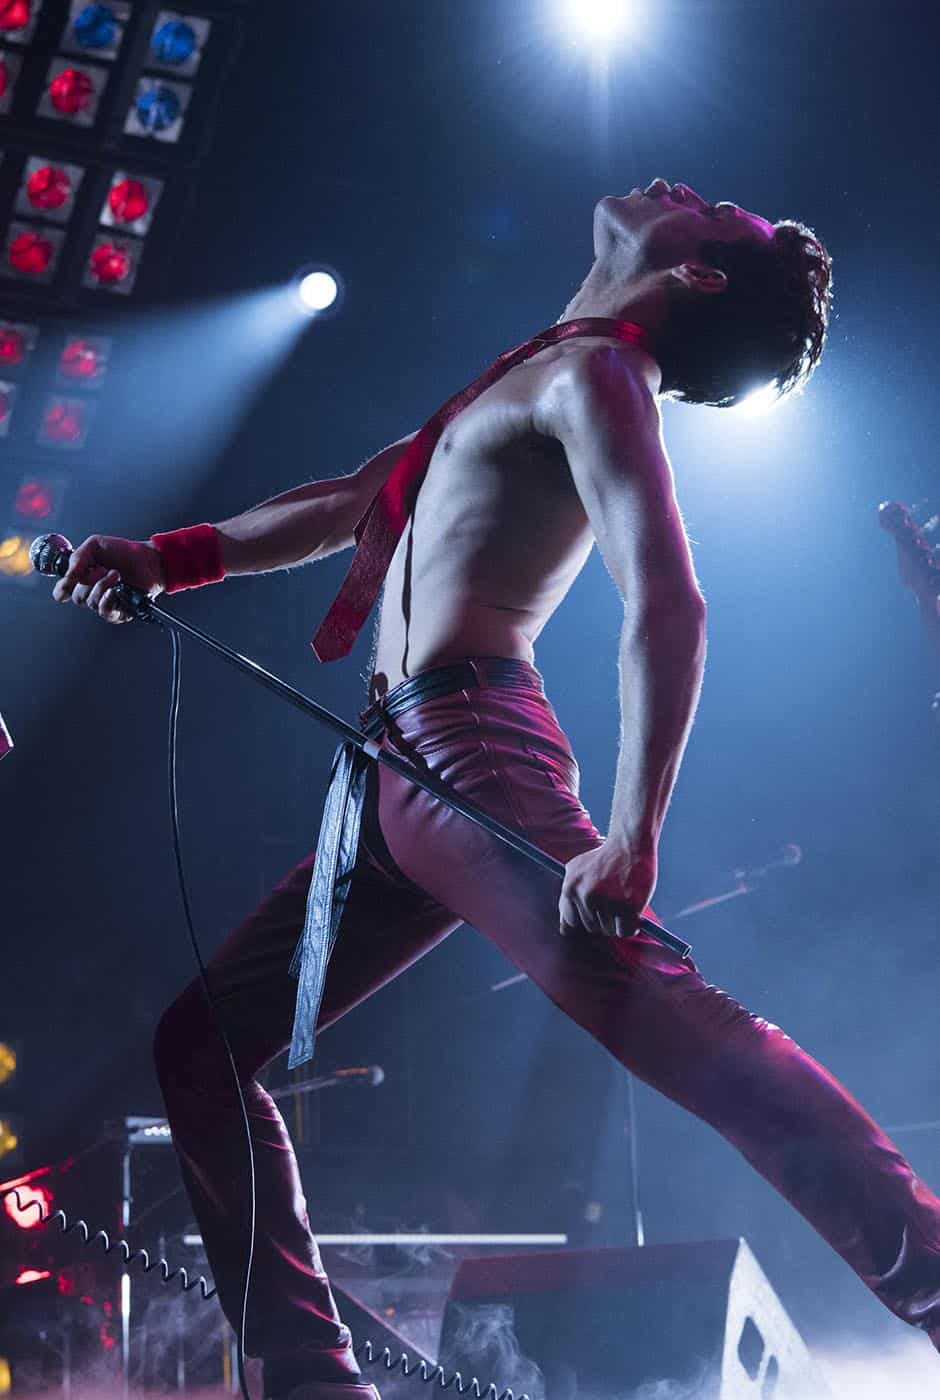 Cinema karaoke - Bohemian Rhapsody